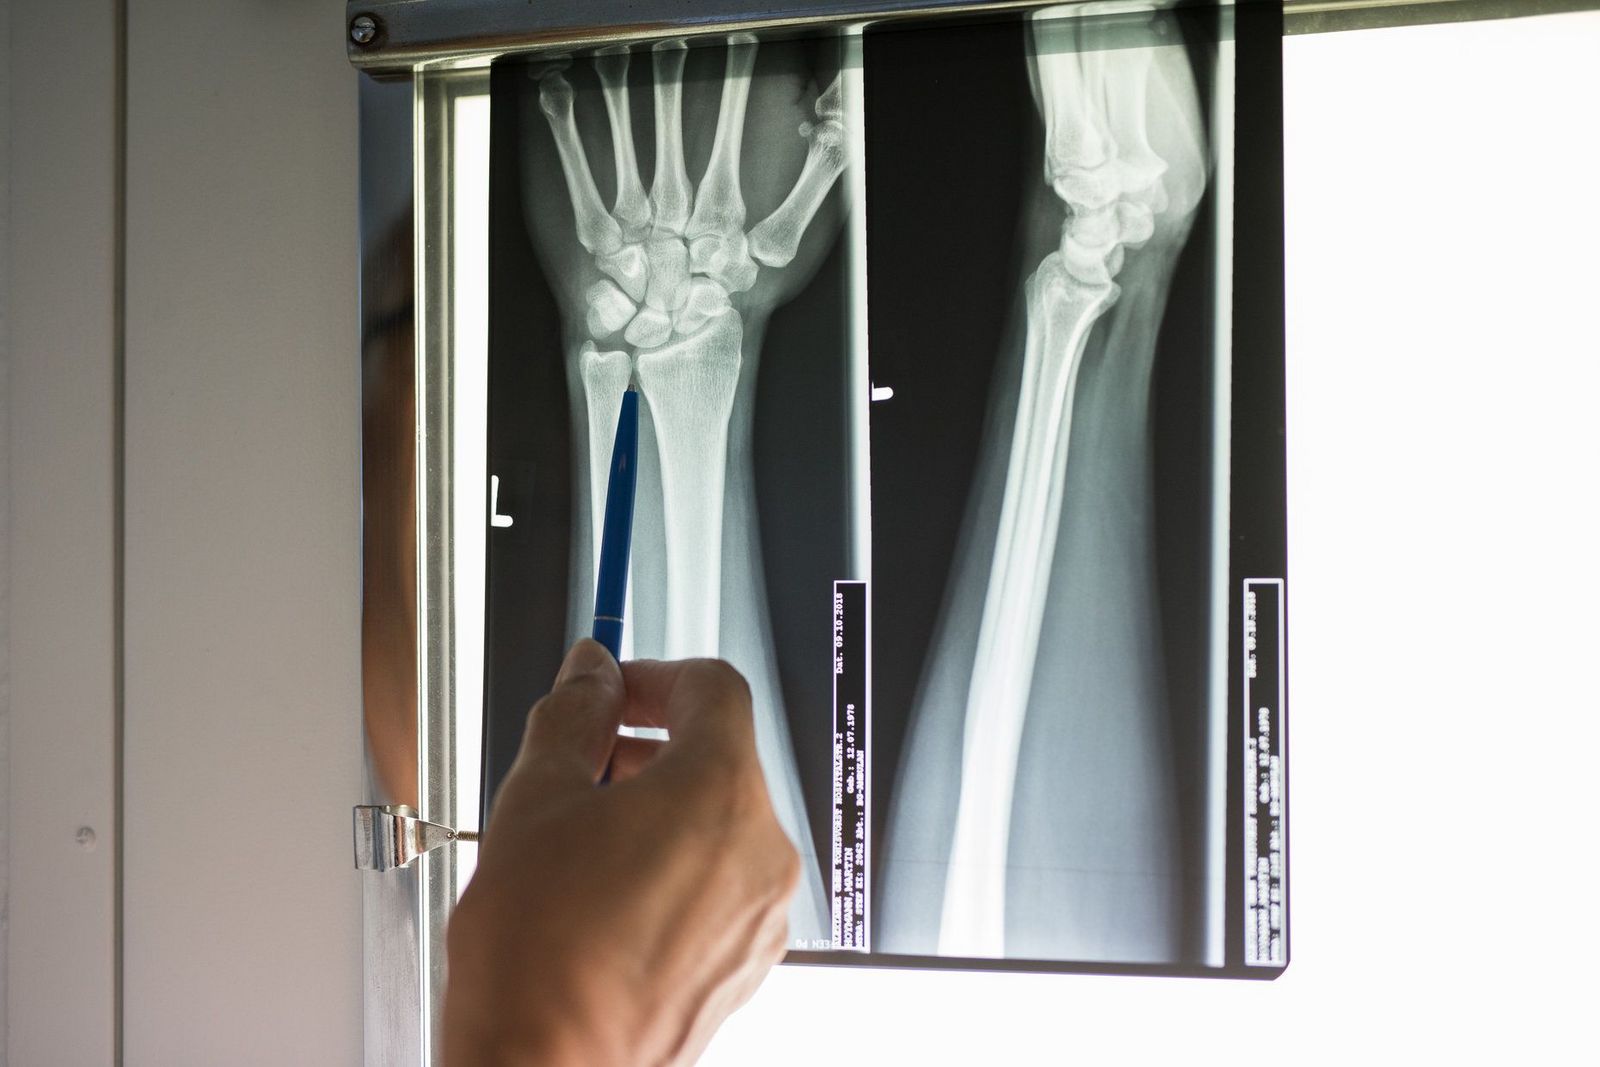 Röntgenbild eines Handgelenks